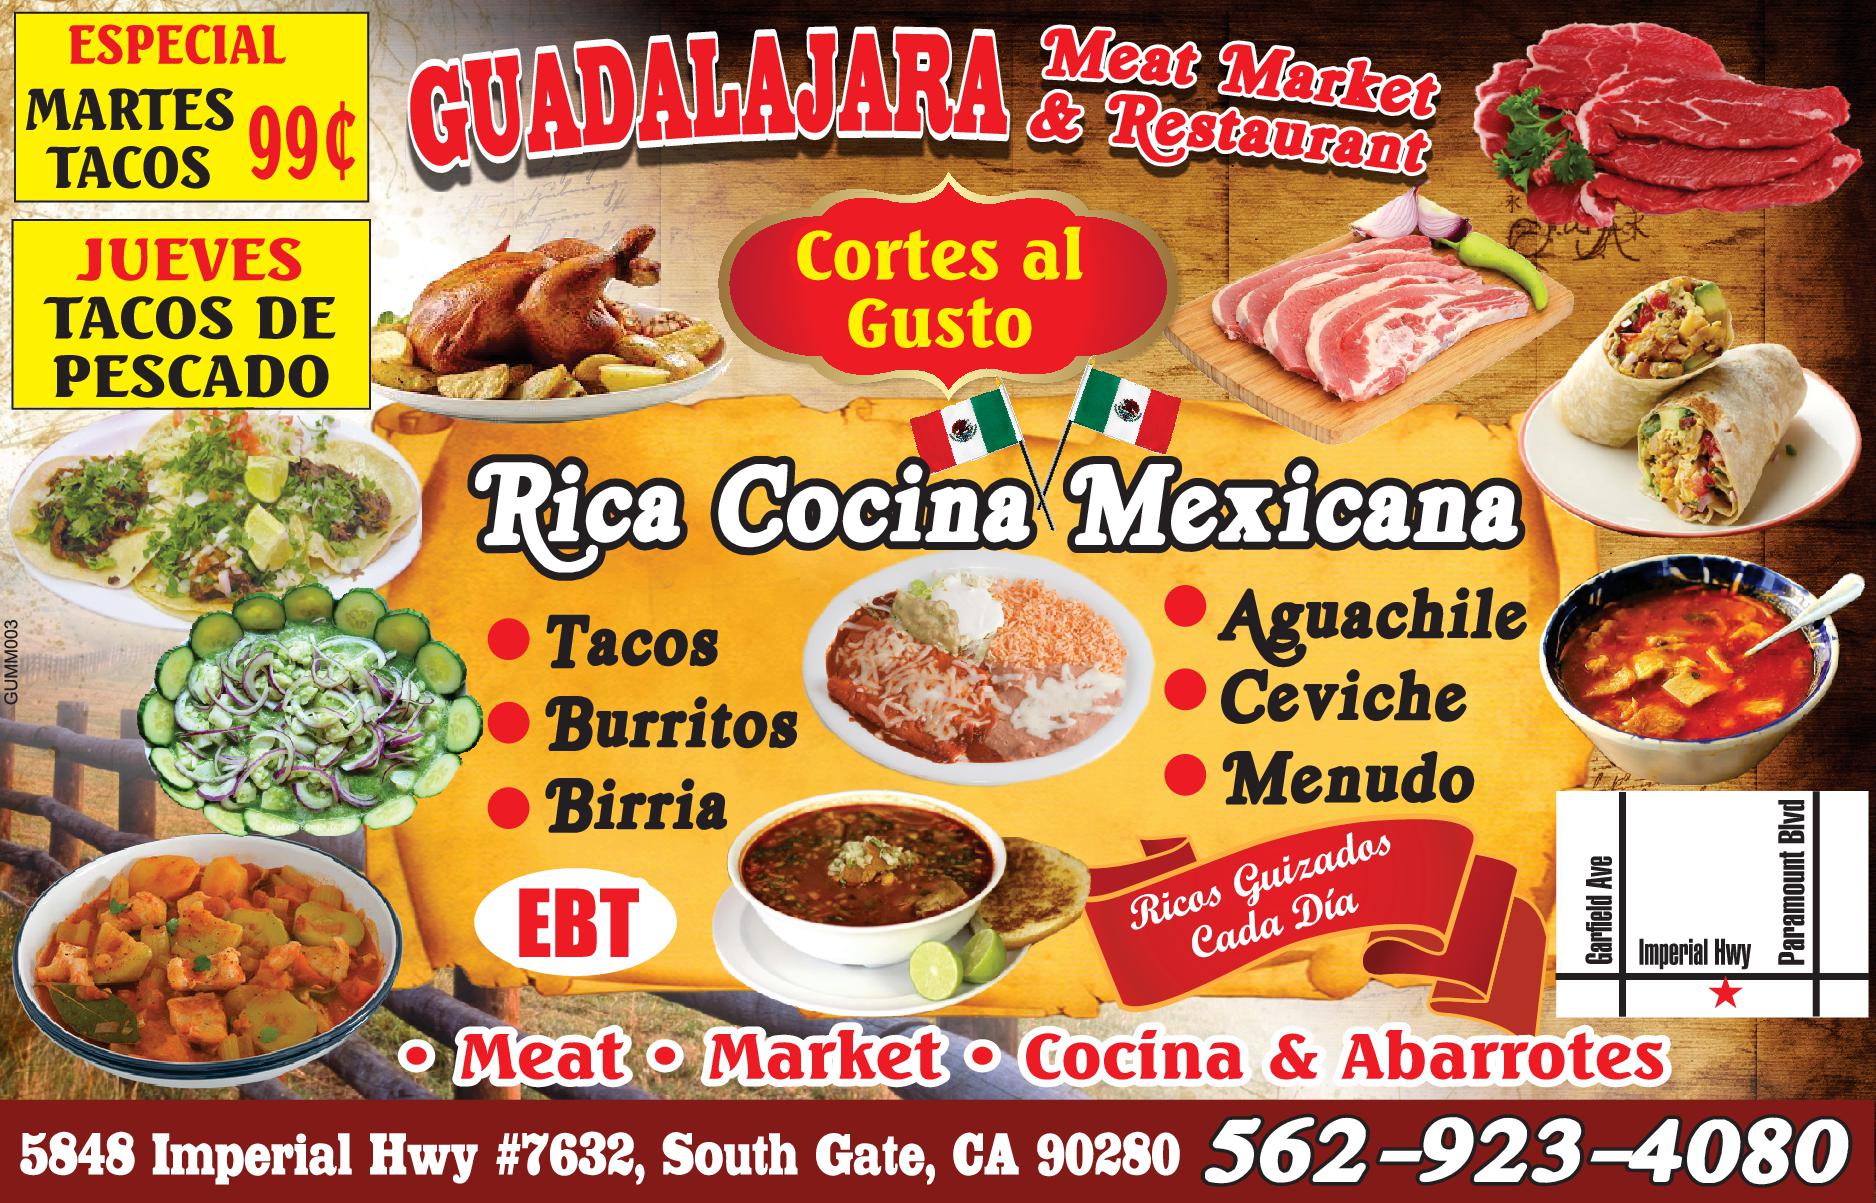 Guadalajara Meat Market, 5848 Imperial Hwy. Ste. 7632, South Gate, CA 90280  , (562) 923-4080 | El Aviso Directorio